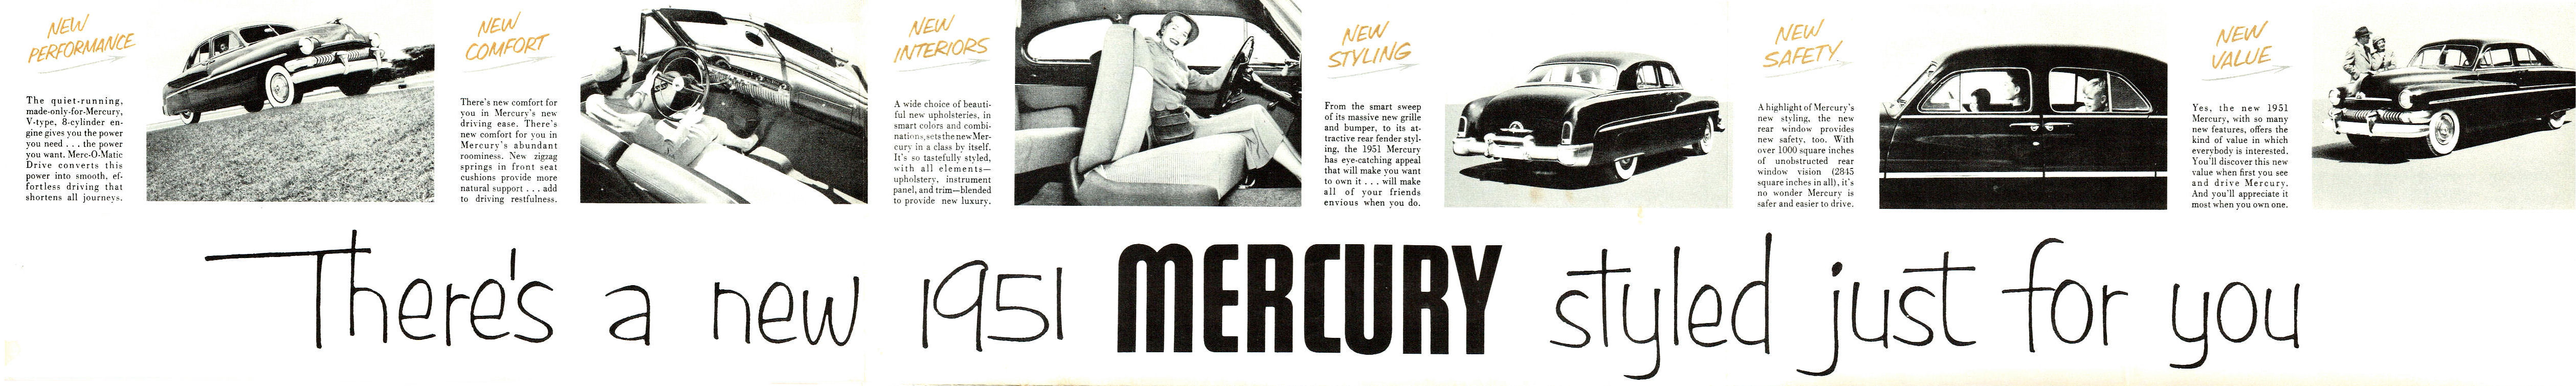 1951_Mercury_Foldout-07-08-09